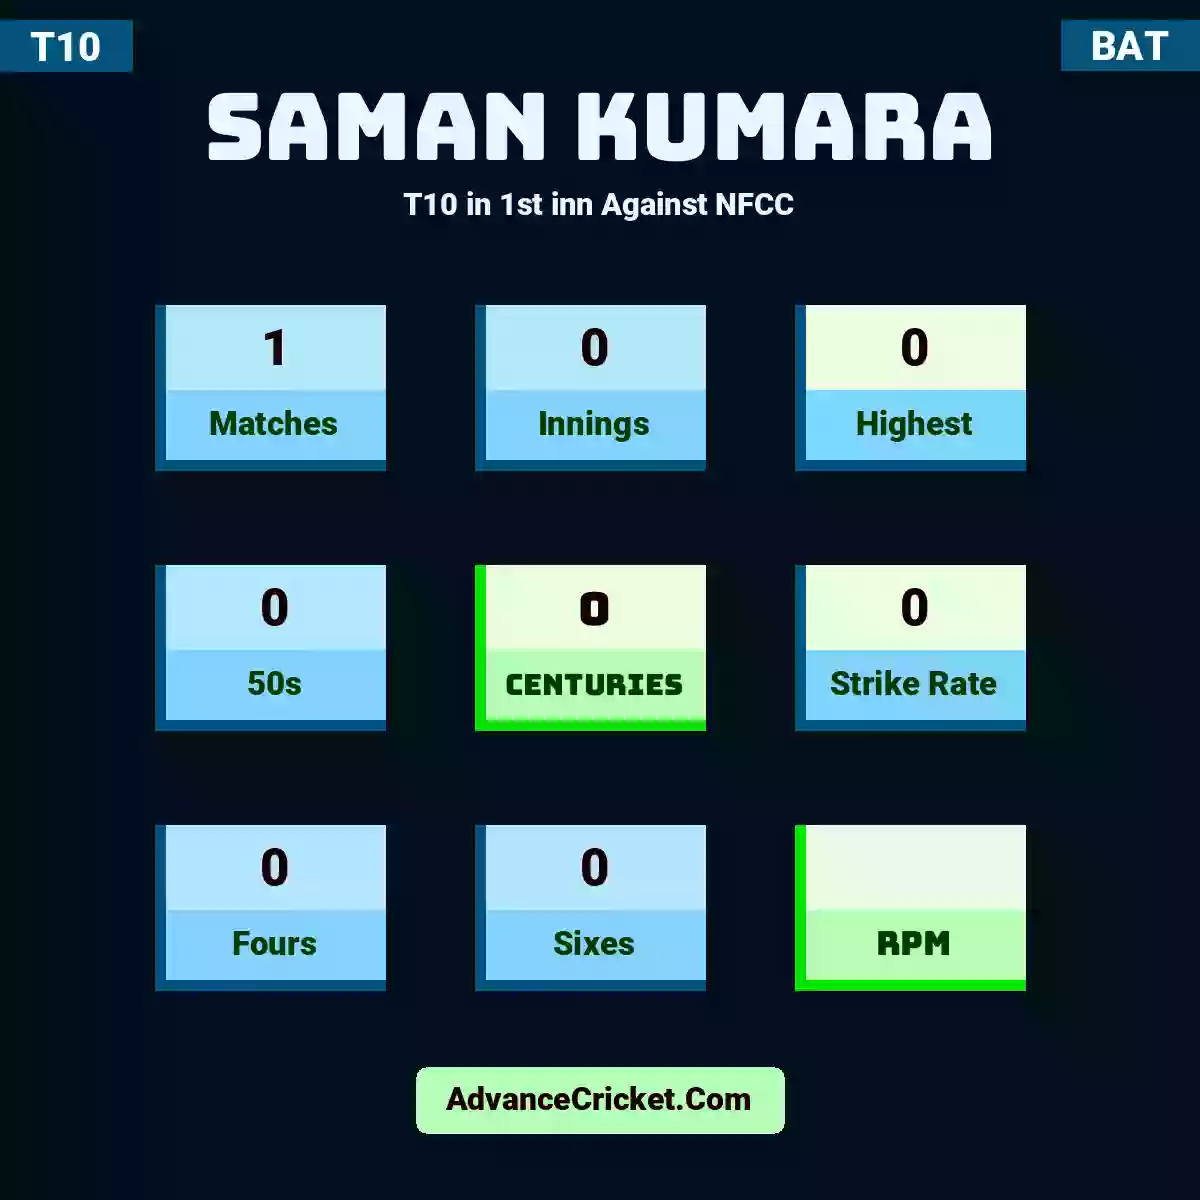 Saman Kumara T10  in 1st inn Against NFCC, Saman Kumara played 1 matches, scored 0 runs as highest, 0 half-centuries, and 0 centuries, with a strike rate of 0. S.Kumara hit 0 fours and 0 sixes.